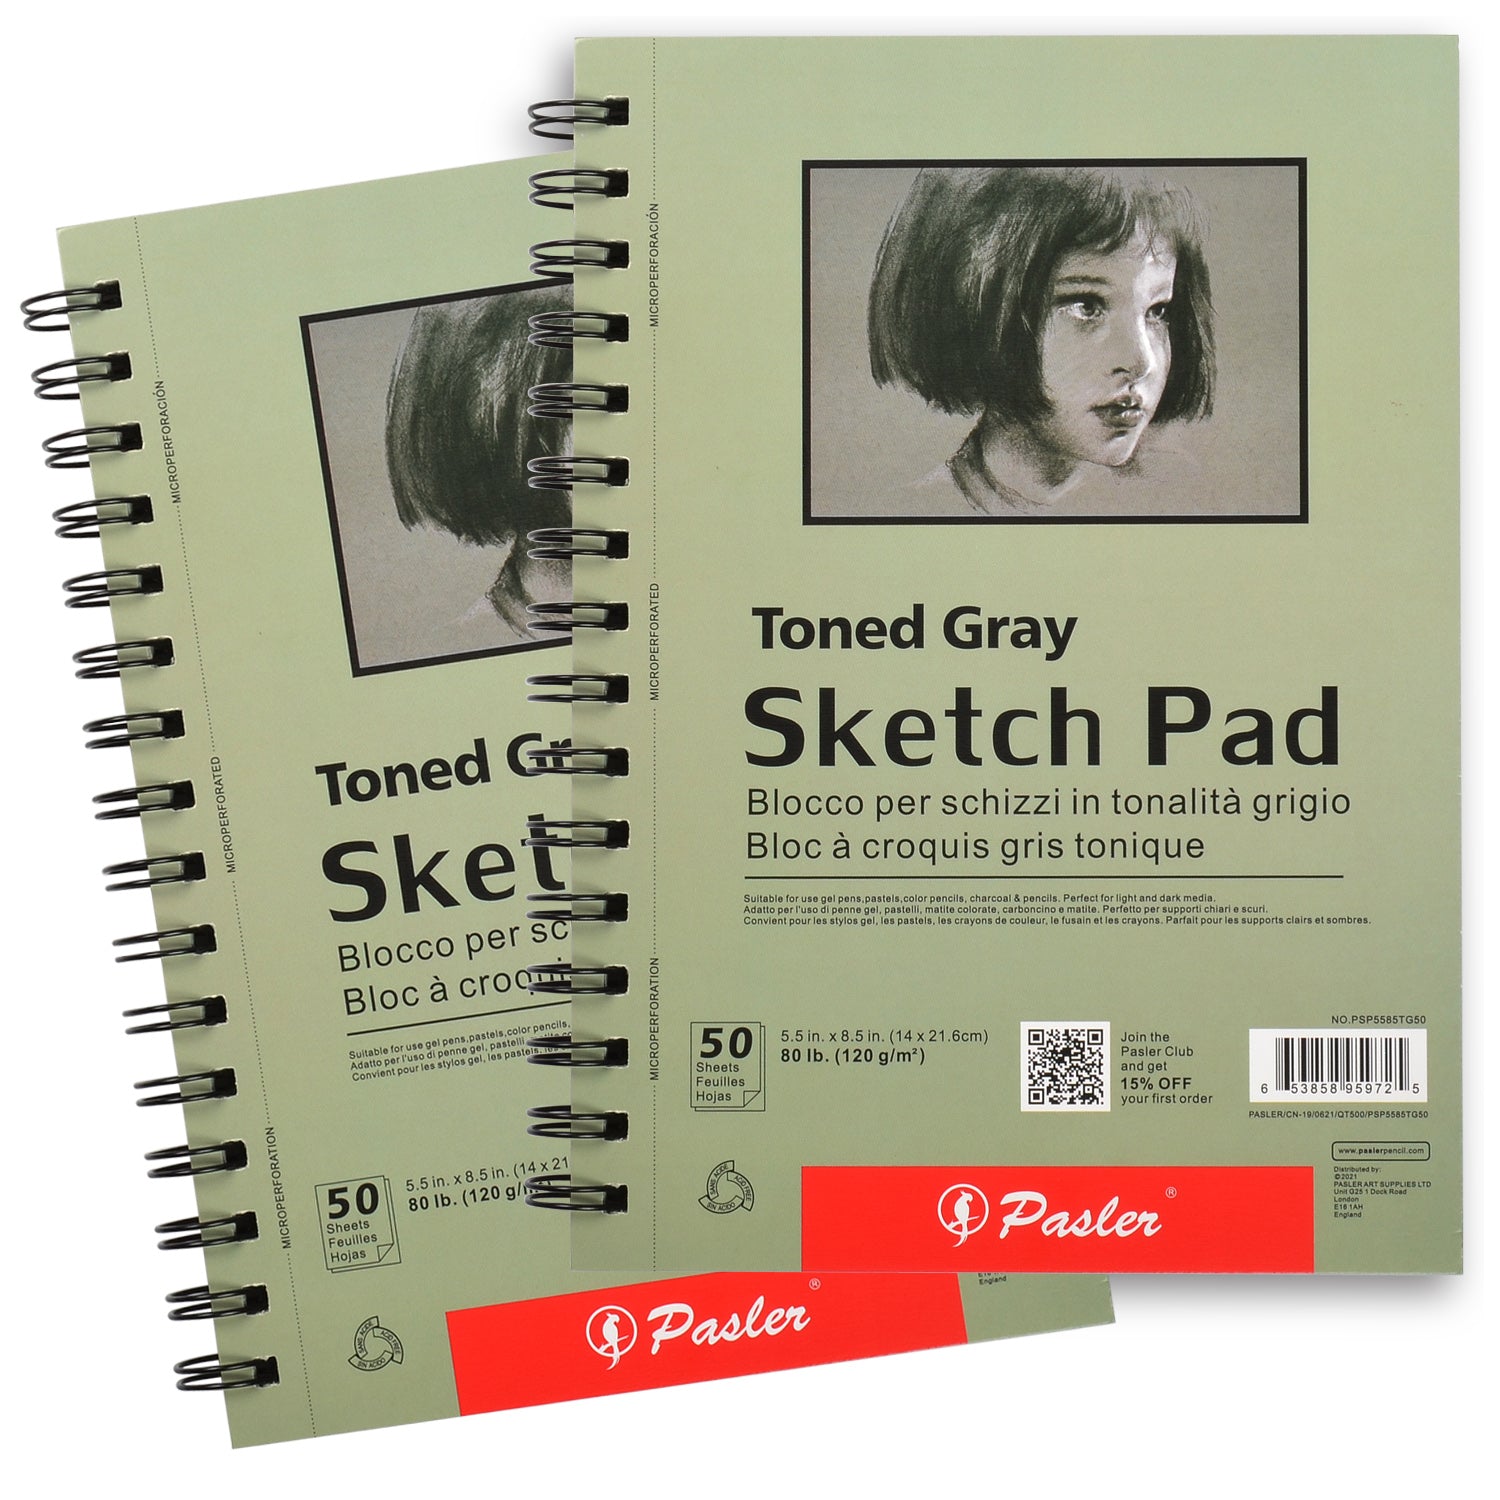 Pasler 5.5X8.5 Toned tan Sketch Pad,2 Pack 100 Sheets (86lb